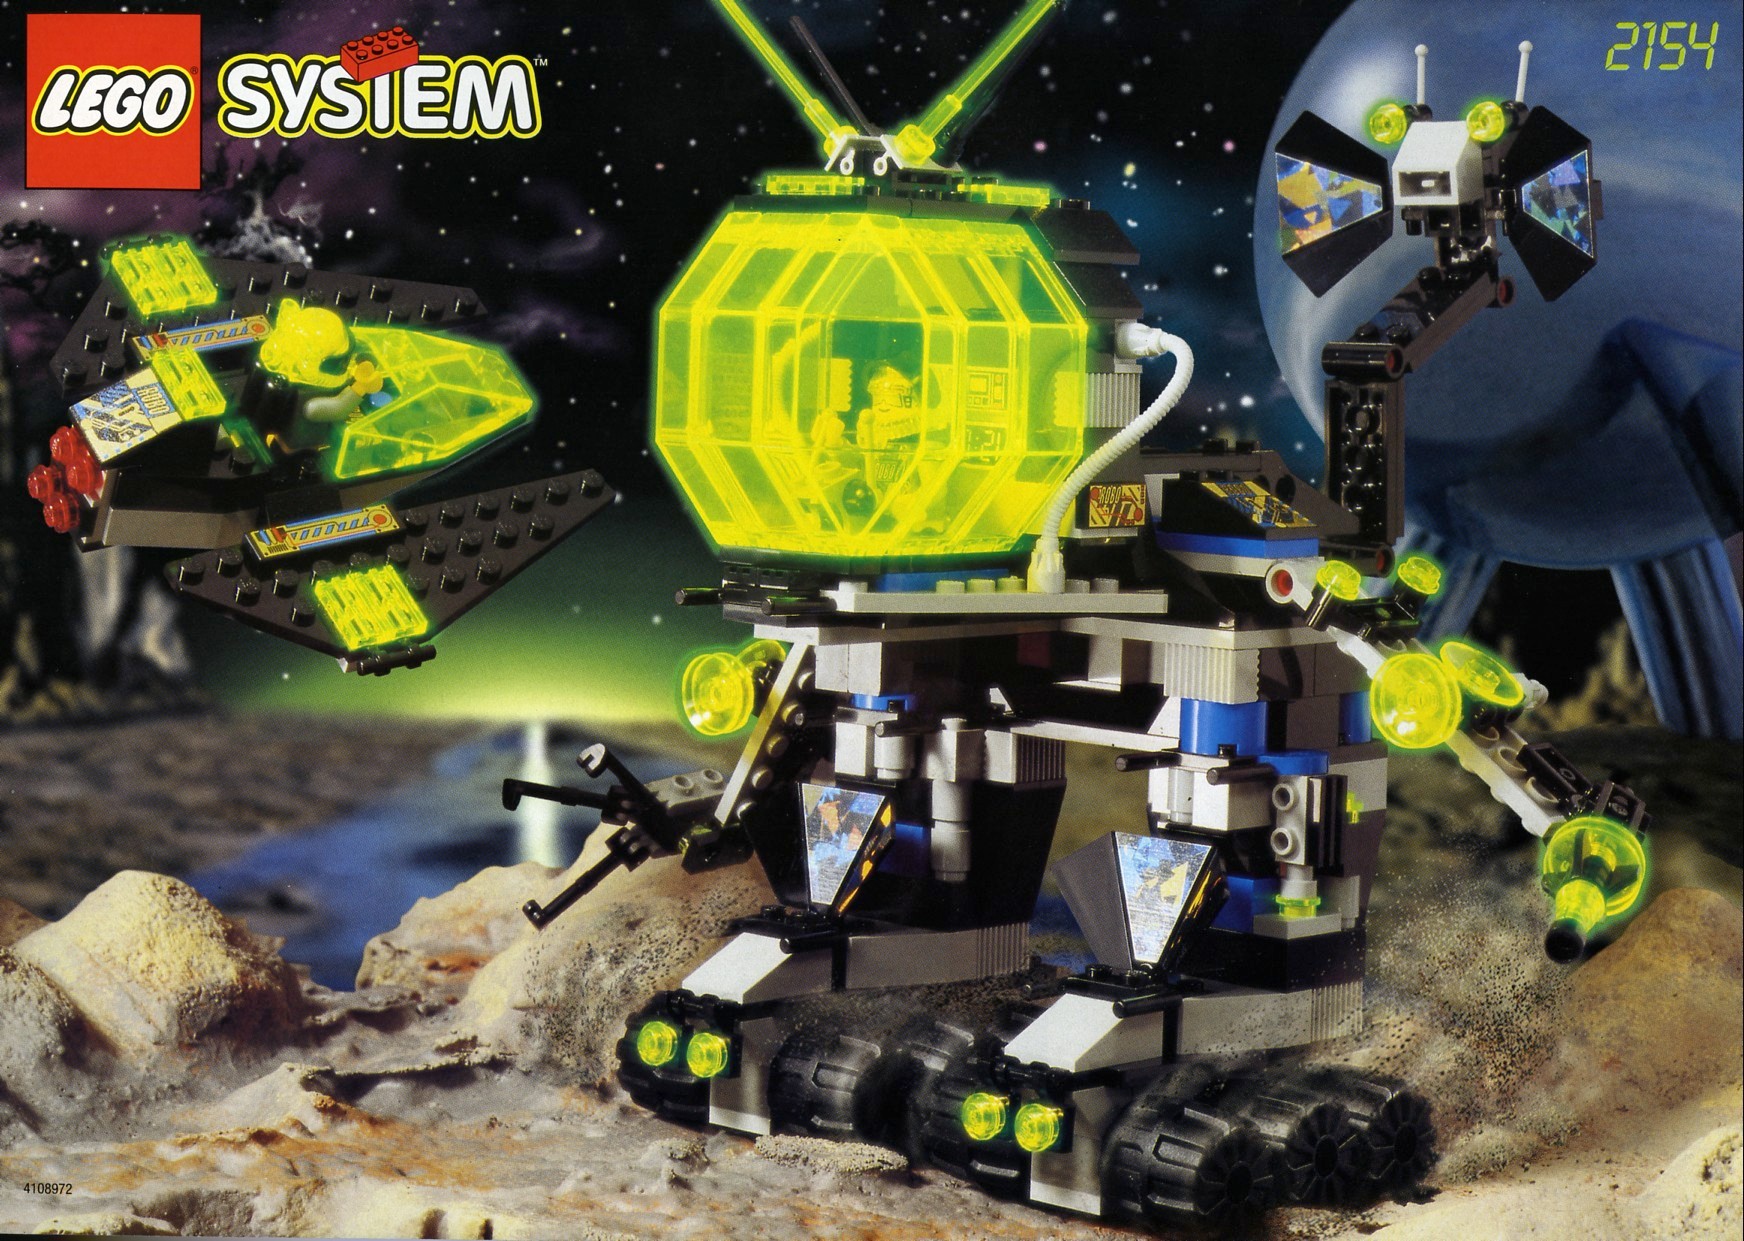 LEGO Space | Brickset